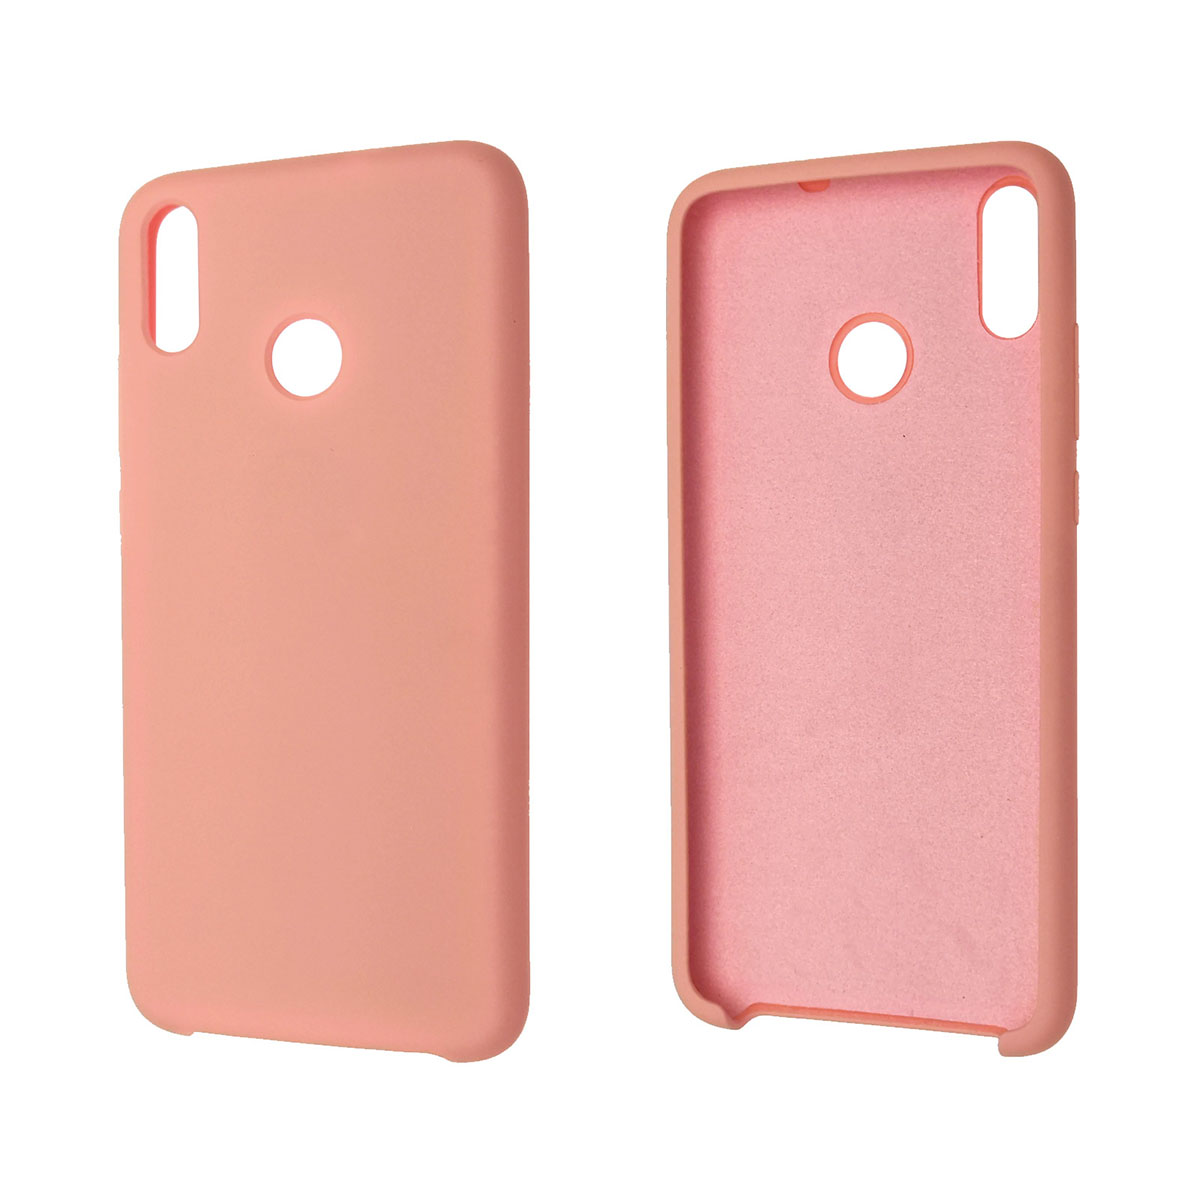 Чехол накладка Silicon Cover для HUAWEI Honor 8X, силикон, бархат, цвет светло розовый.